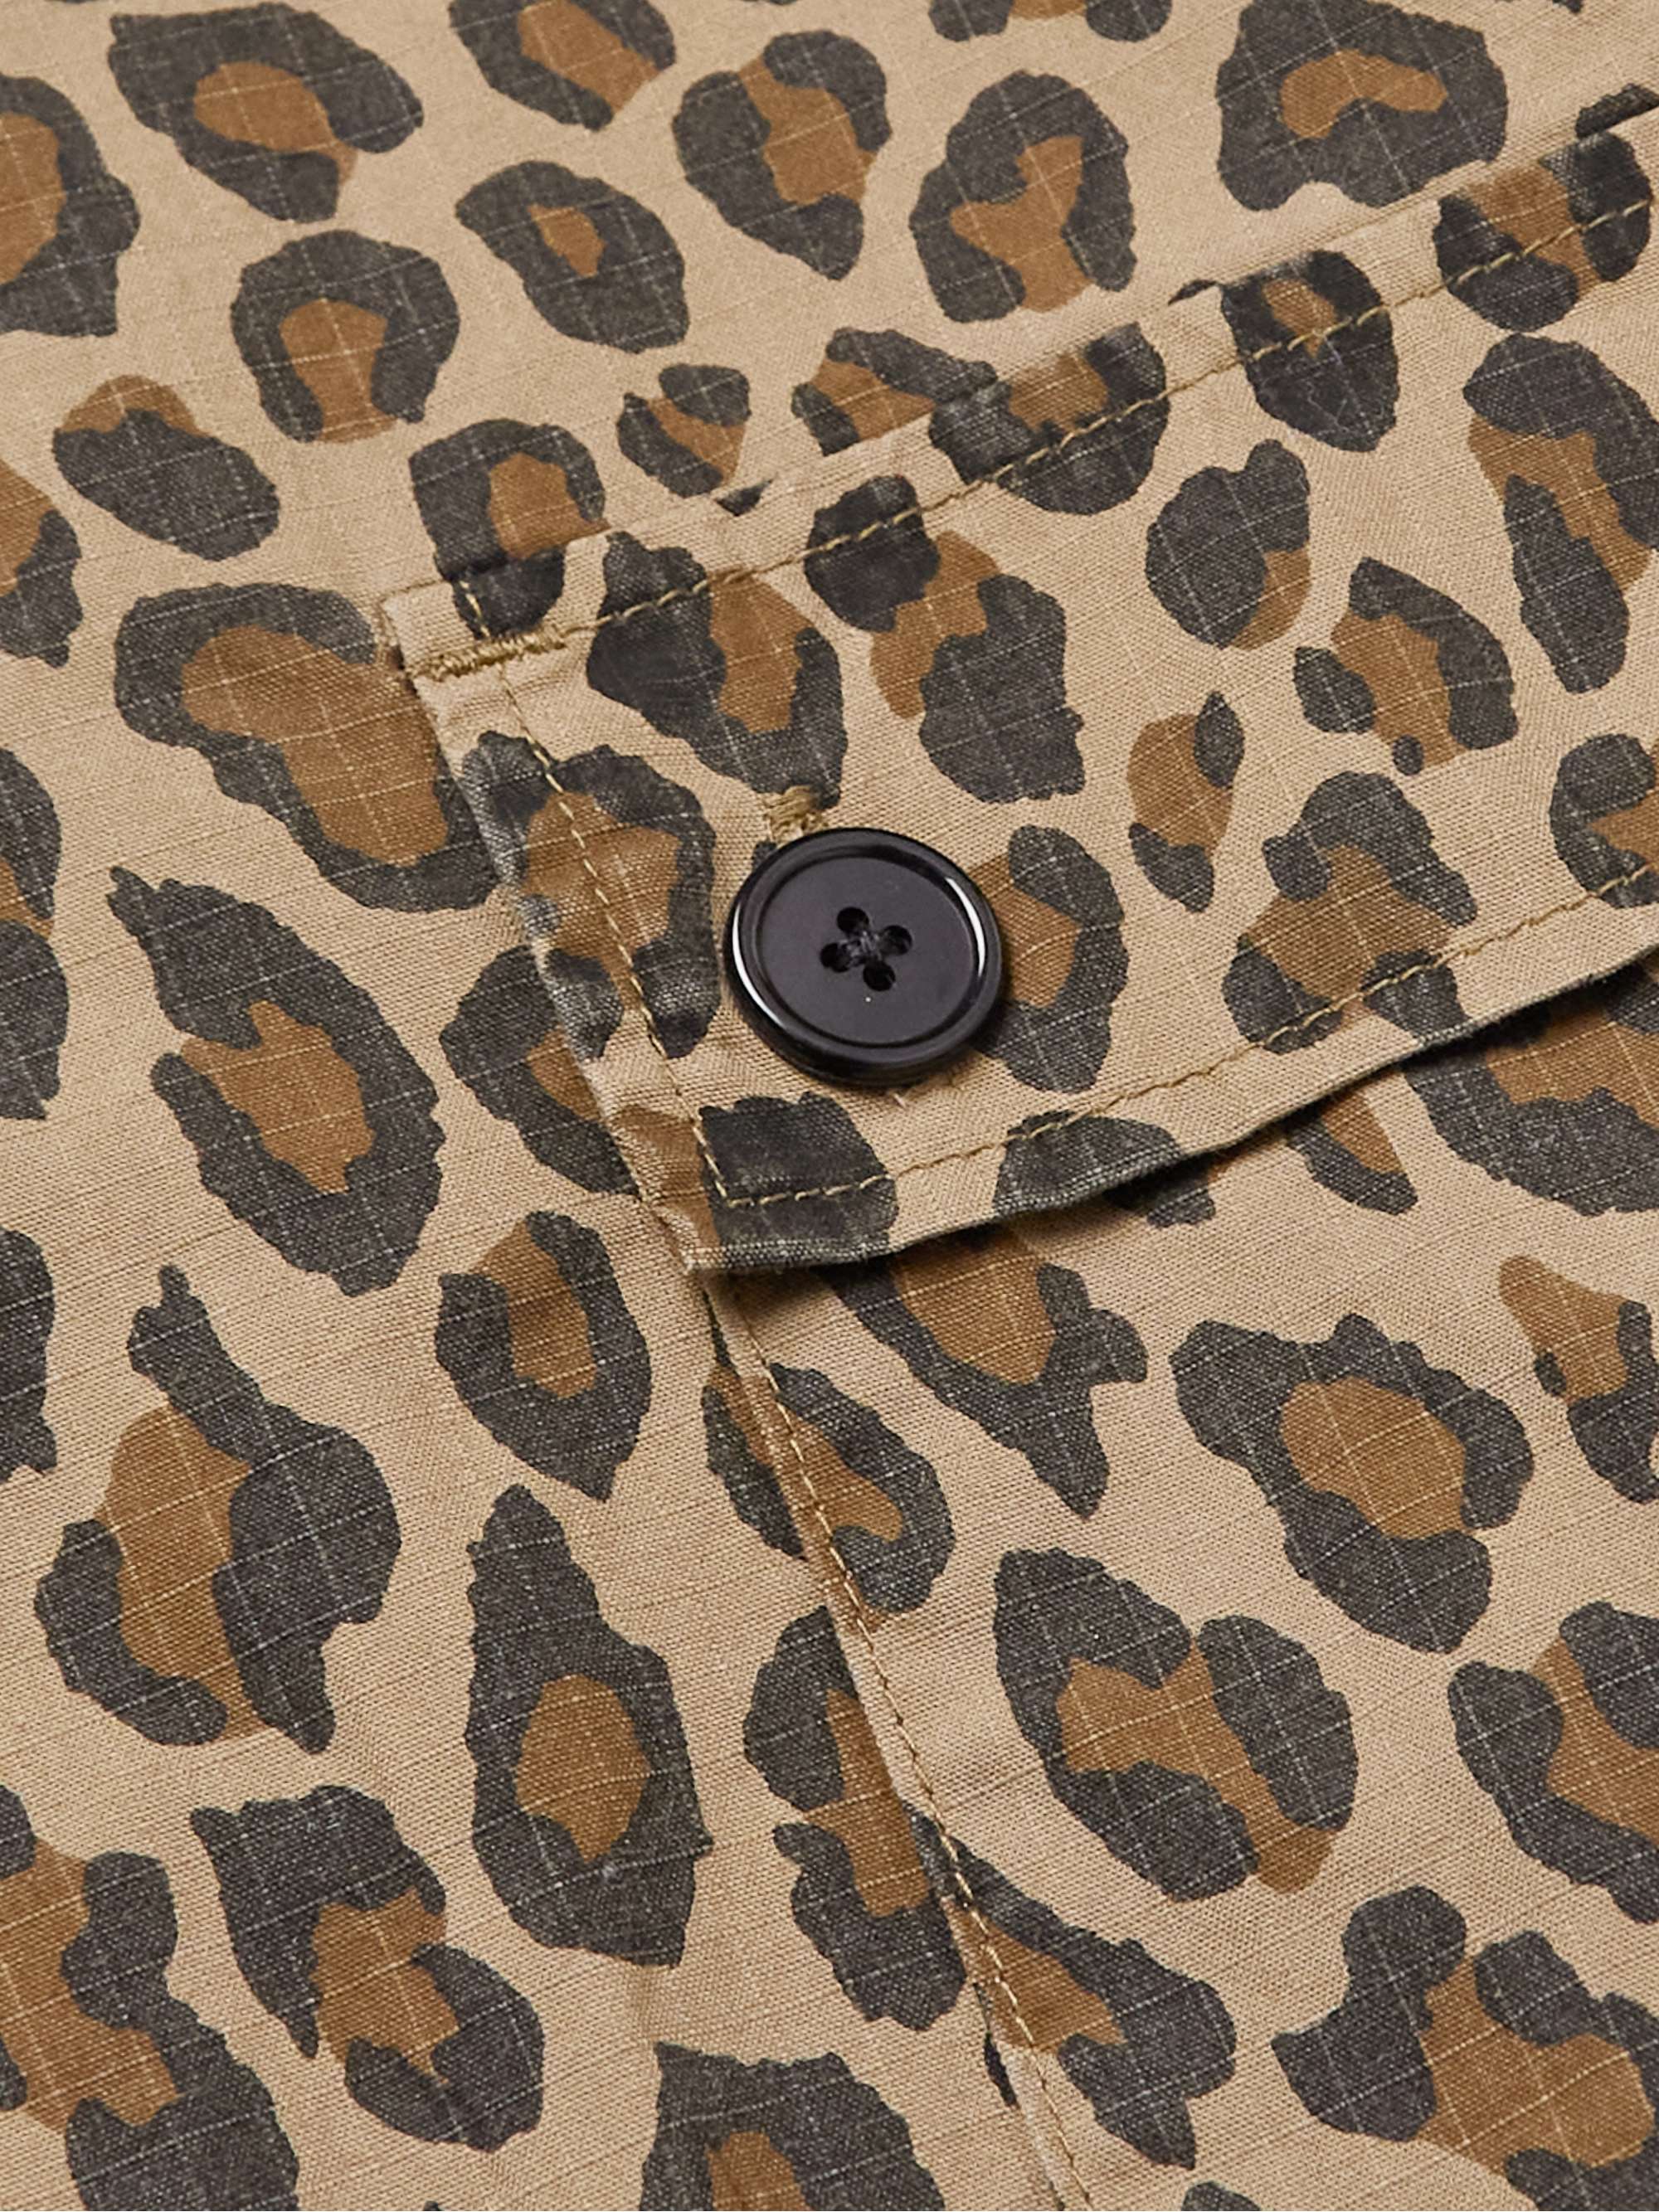 WACKO MARIA Leopard-Print Cotton-Ripstop Overshirt